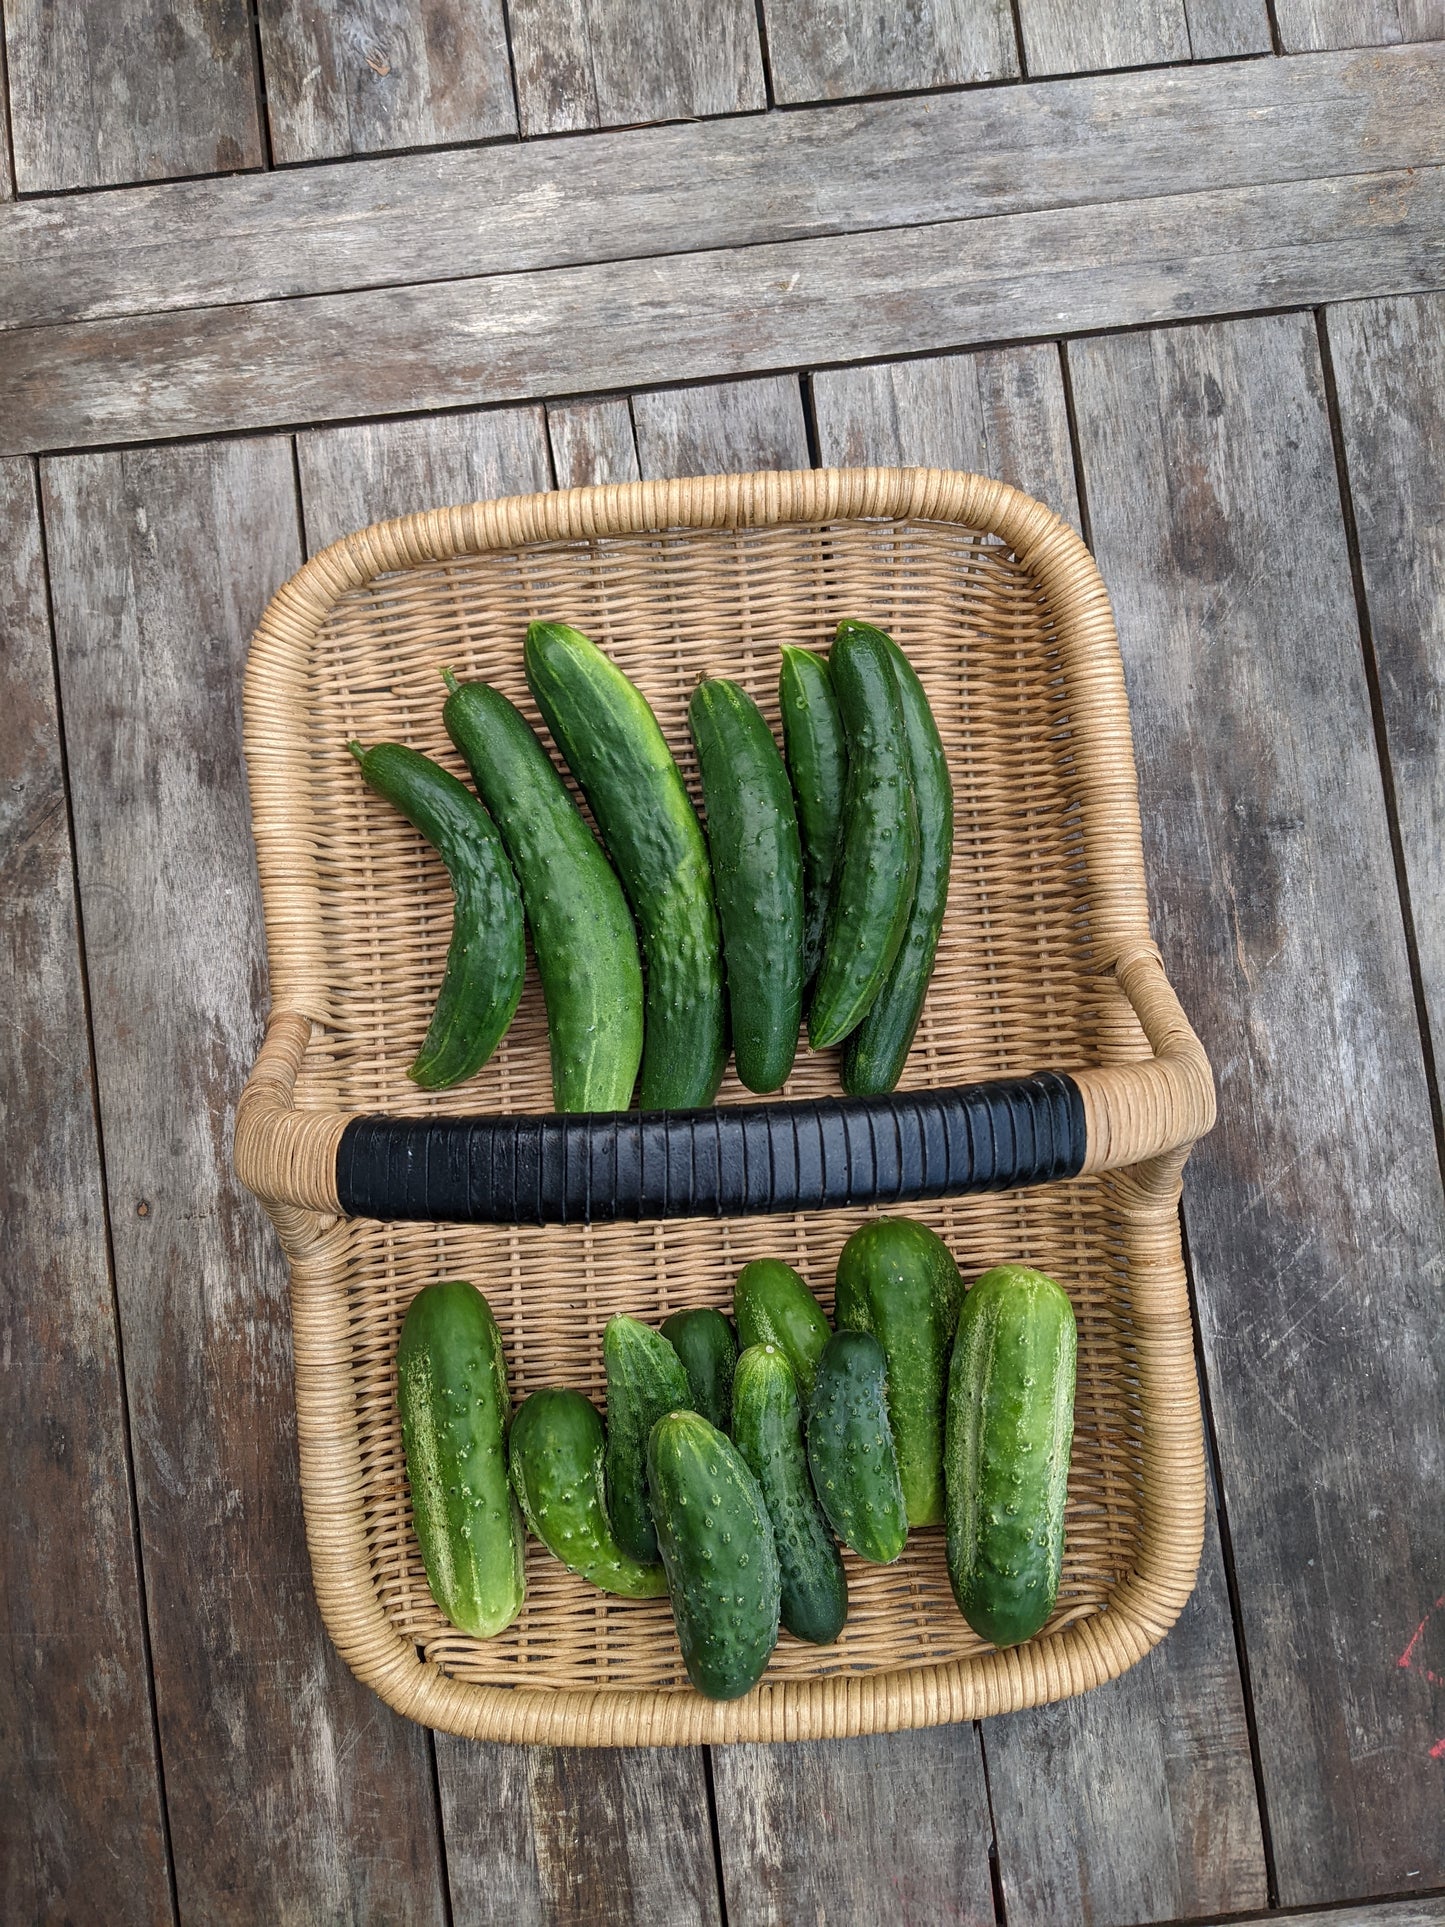 Cucumbers - No Spray (2lbs bags)